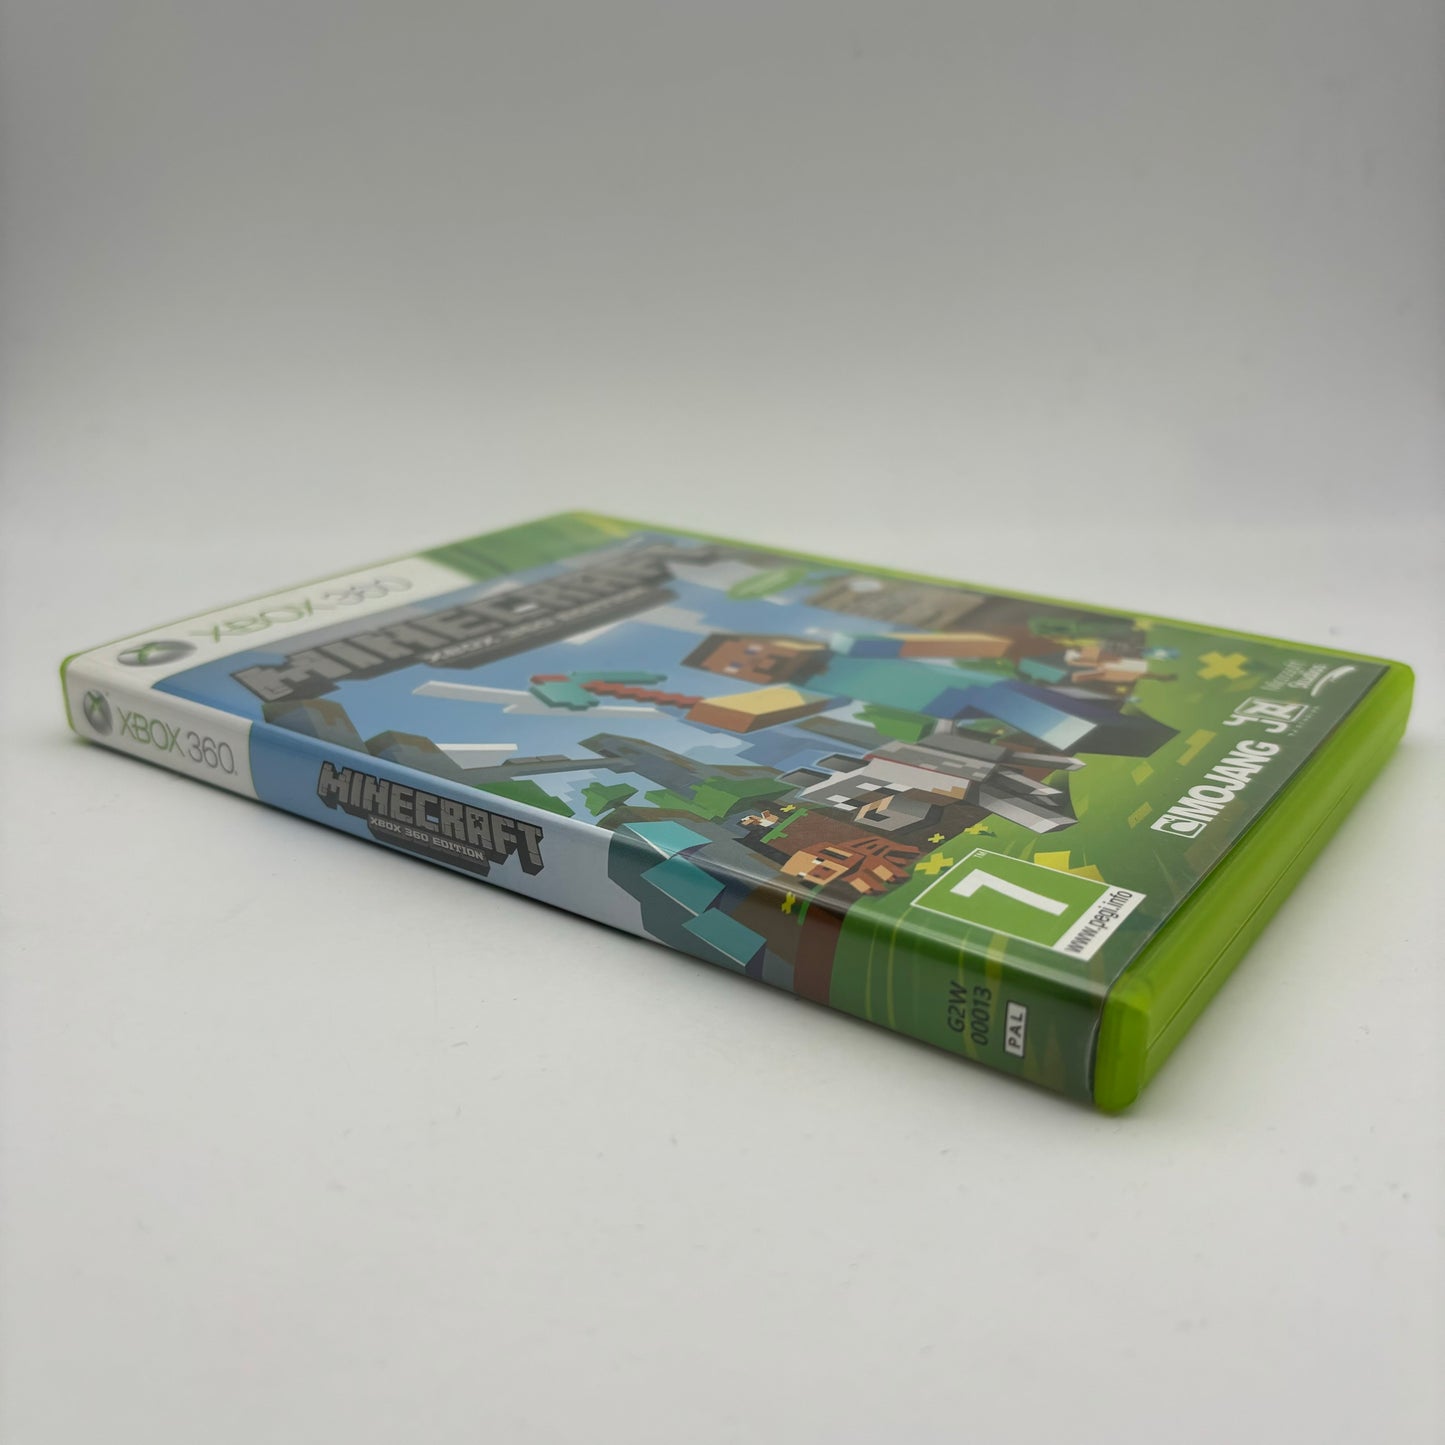 Minecraft Xbox 360 Edition Pal Ita (USATO)